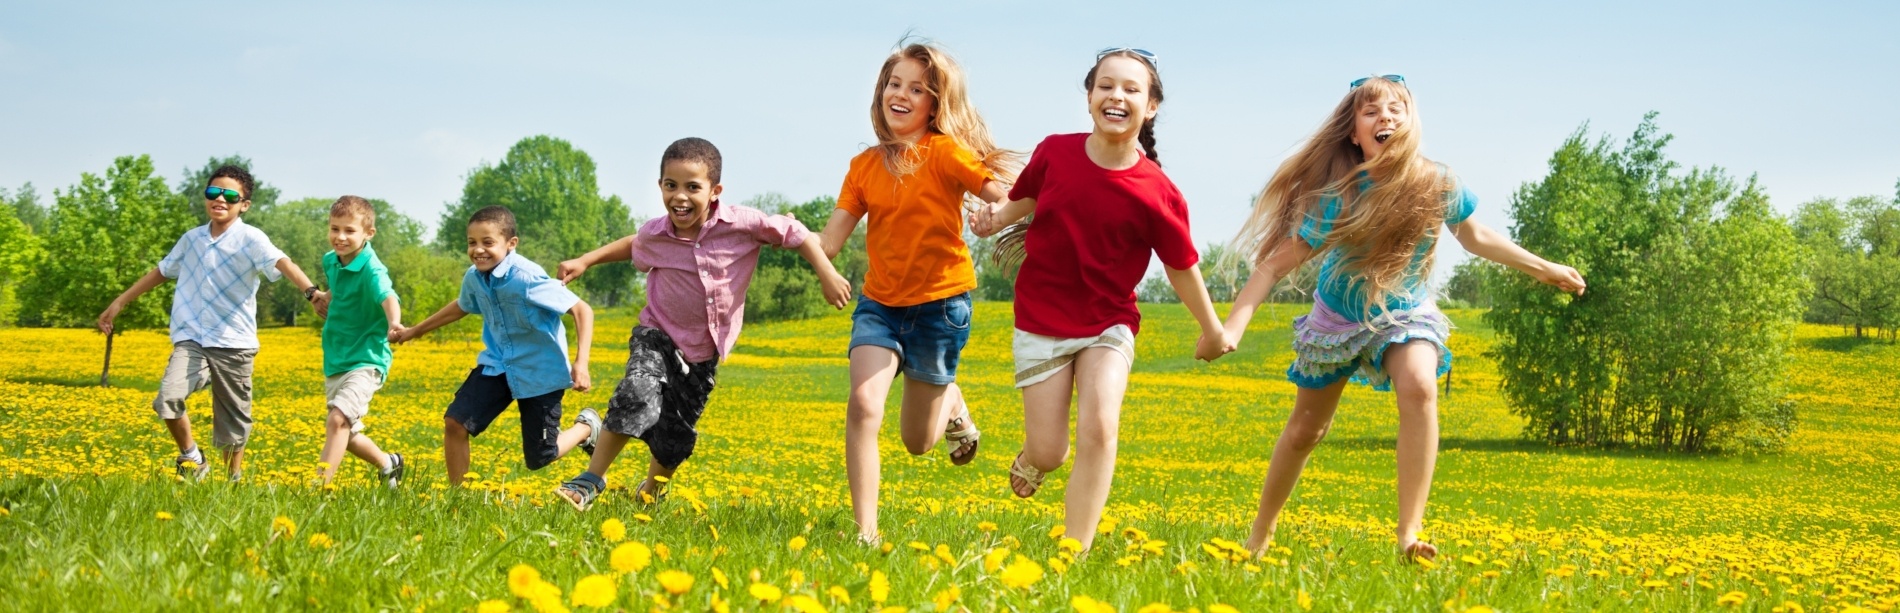 Children playfully running through a field of dandelions